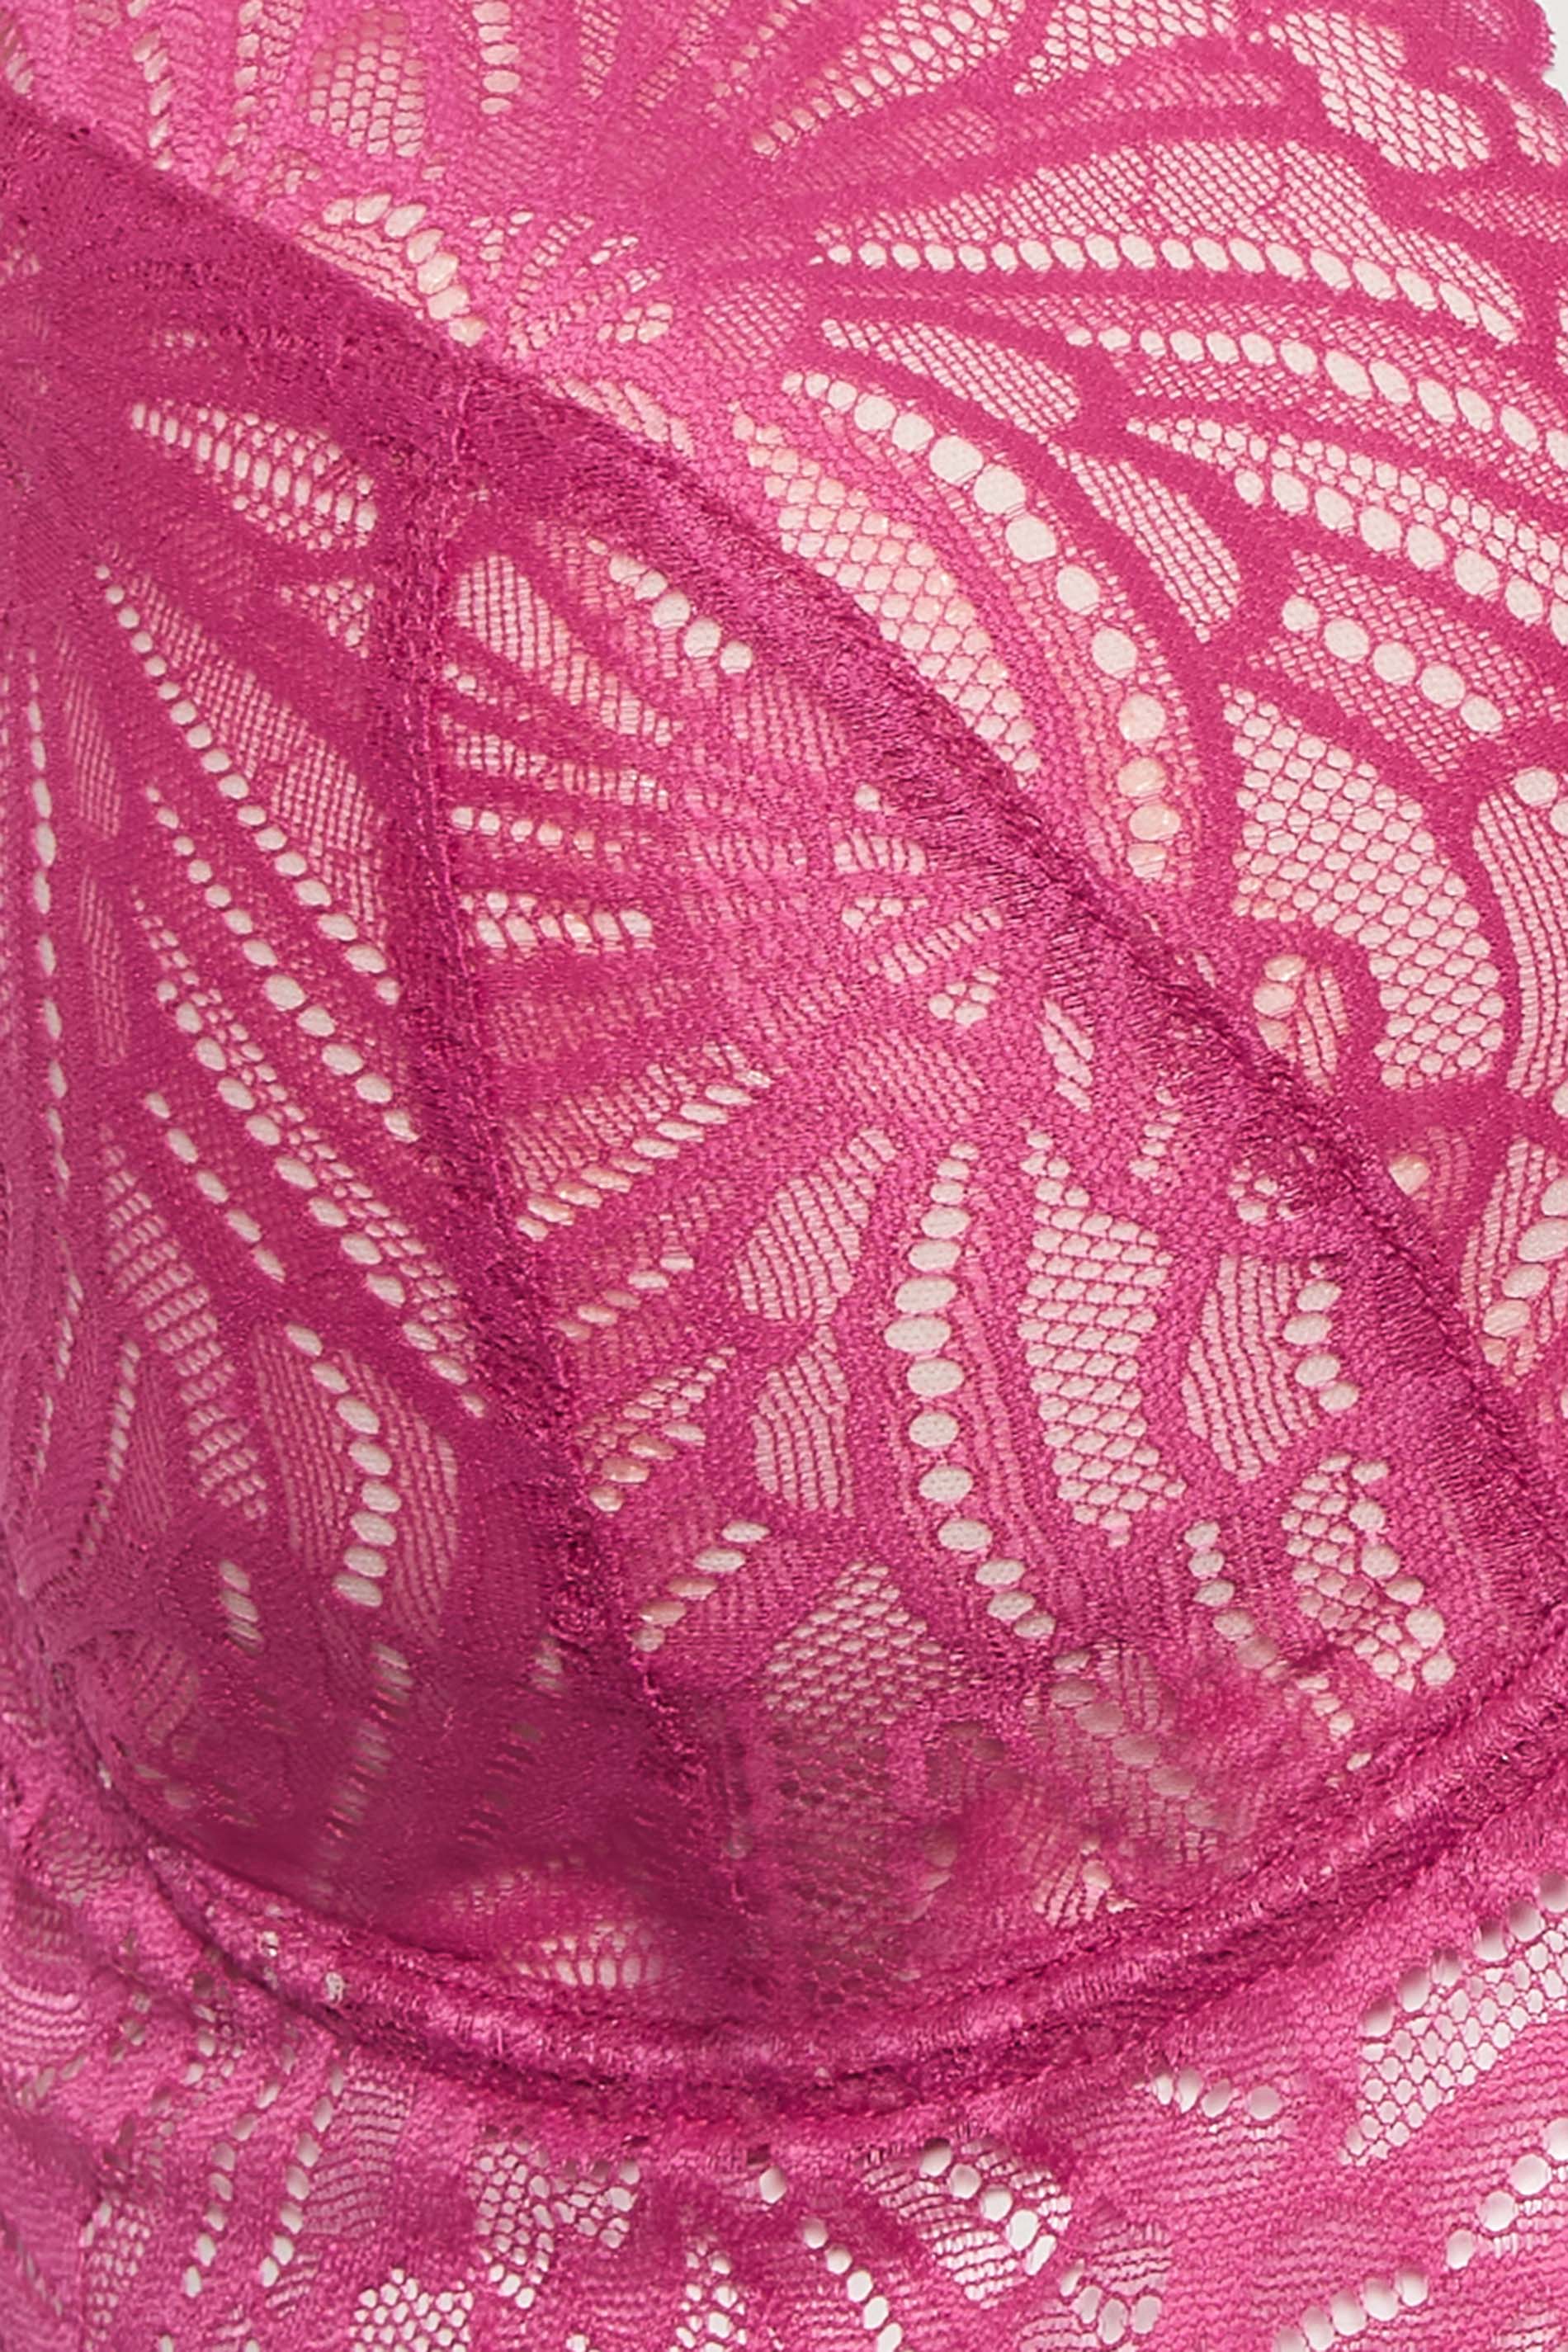 Shape Dusty Pink Lace Thick Strap Bra, Curve